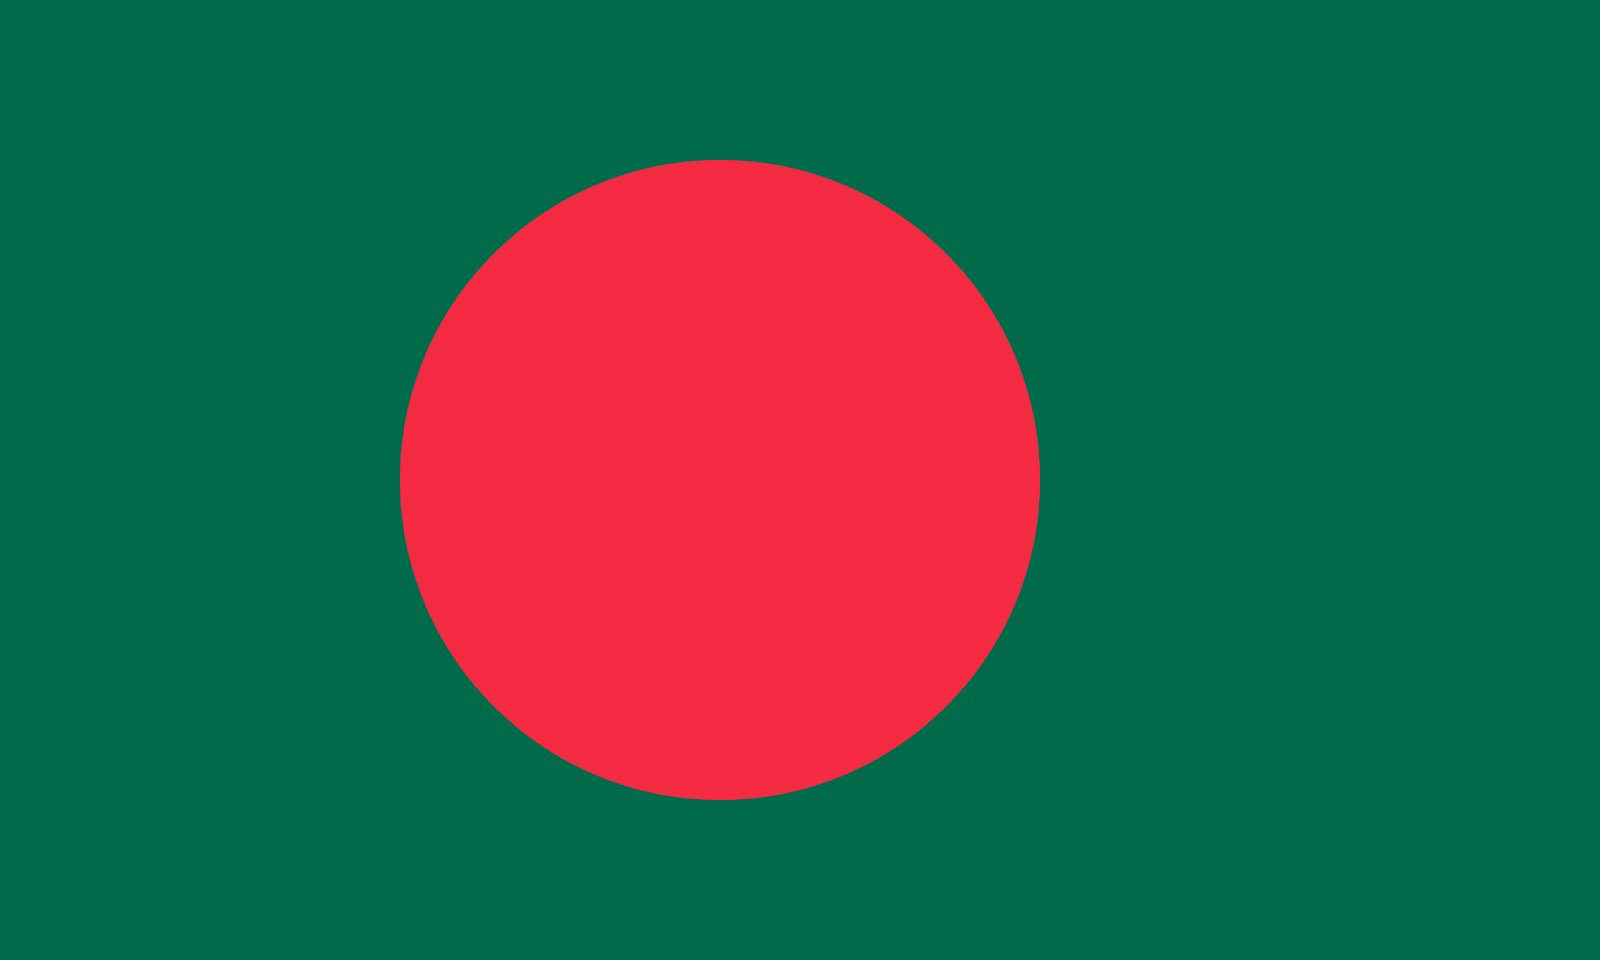 Bangladesh Flag Pictures